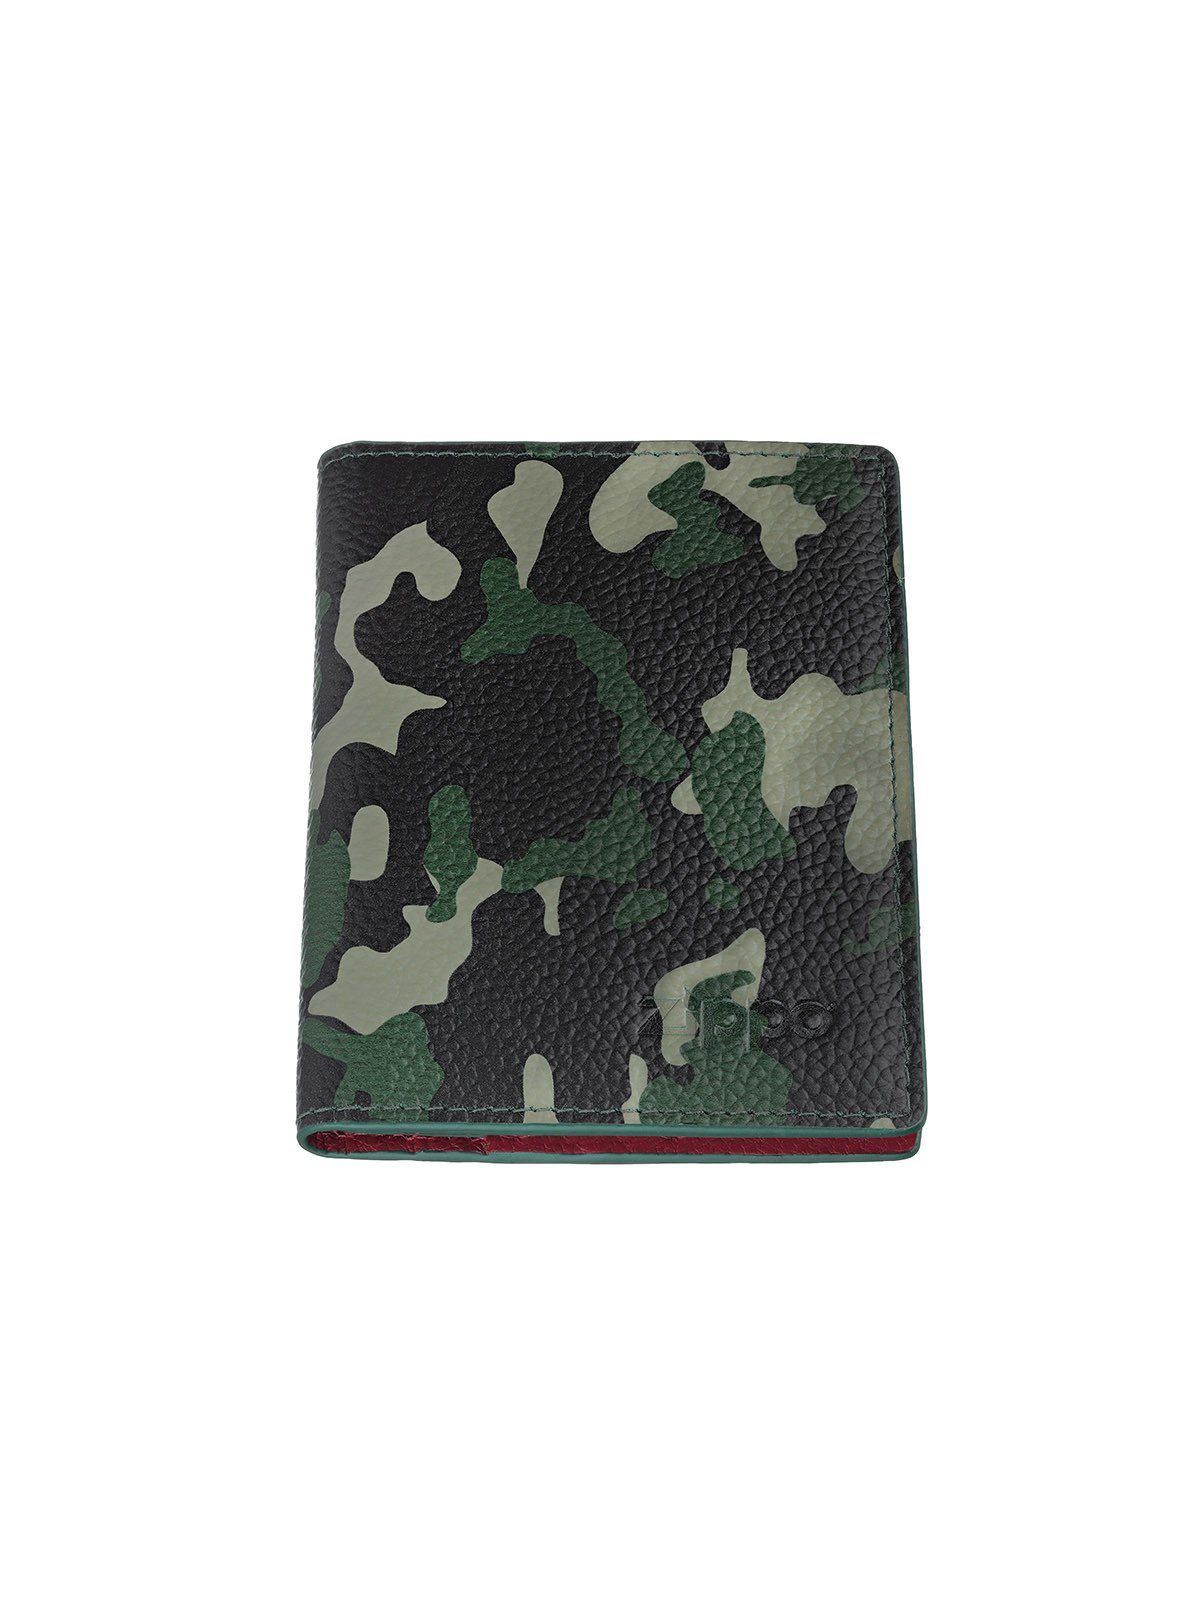 Zippo Geldbörse Geldbörse camouflage/grün, Kreditkartenfächer